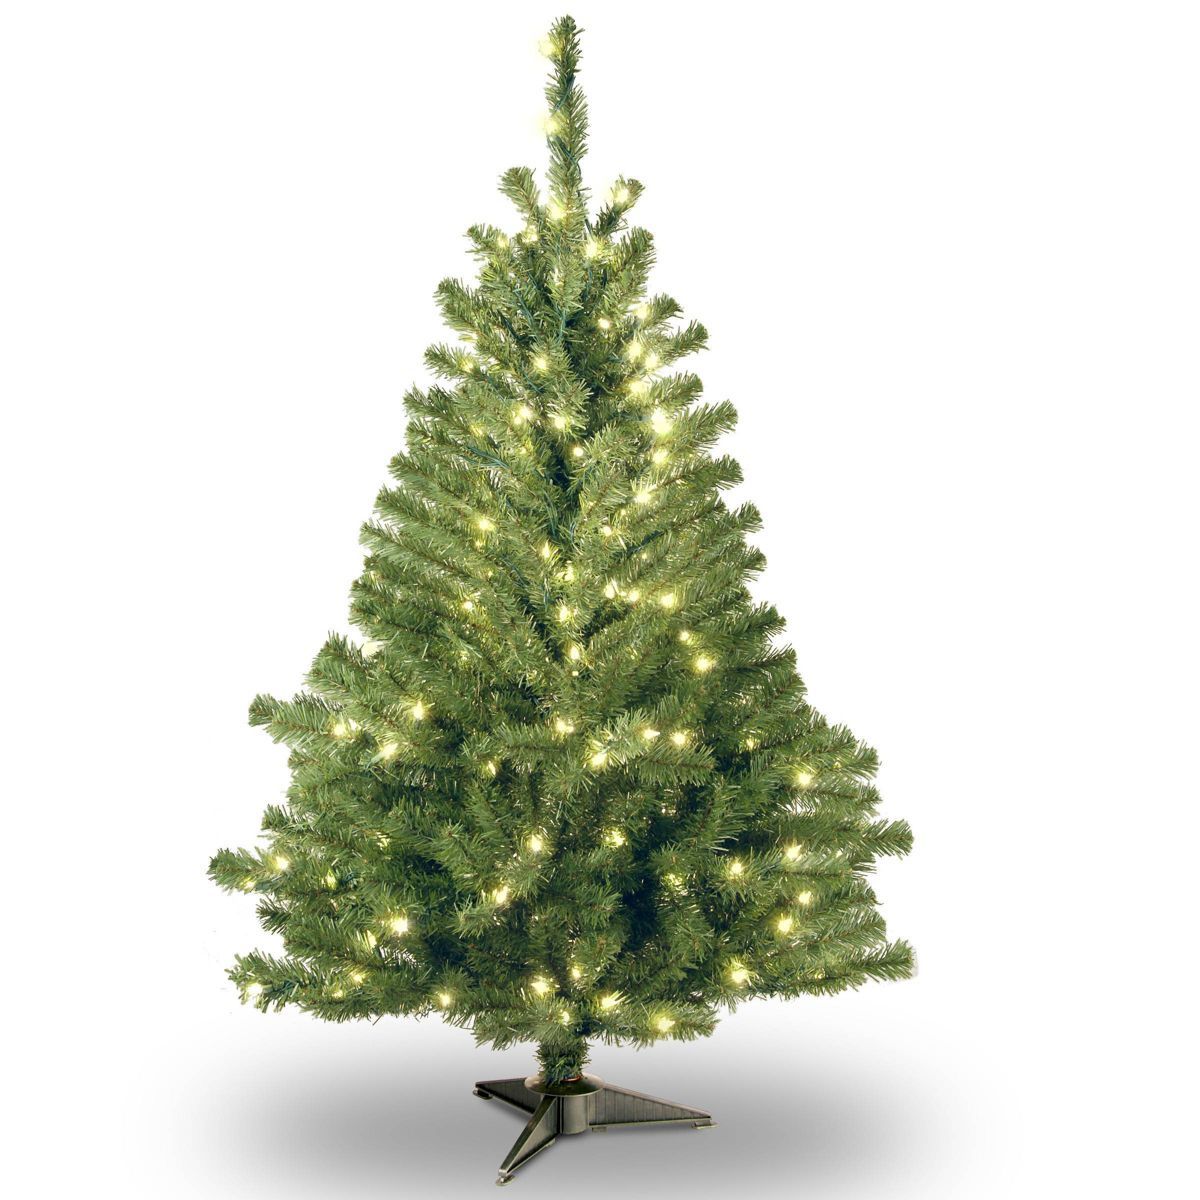 4ft National Christmas Tree Company Pre-Lit Kincaid Spruce Christmas Tree With 100 Clear Lights | Target